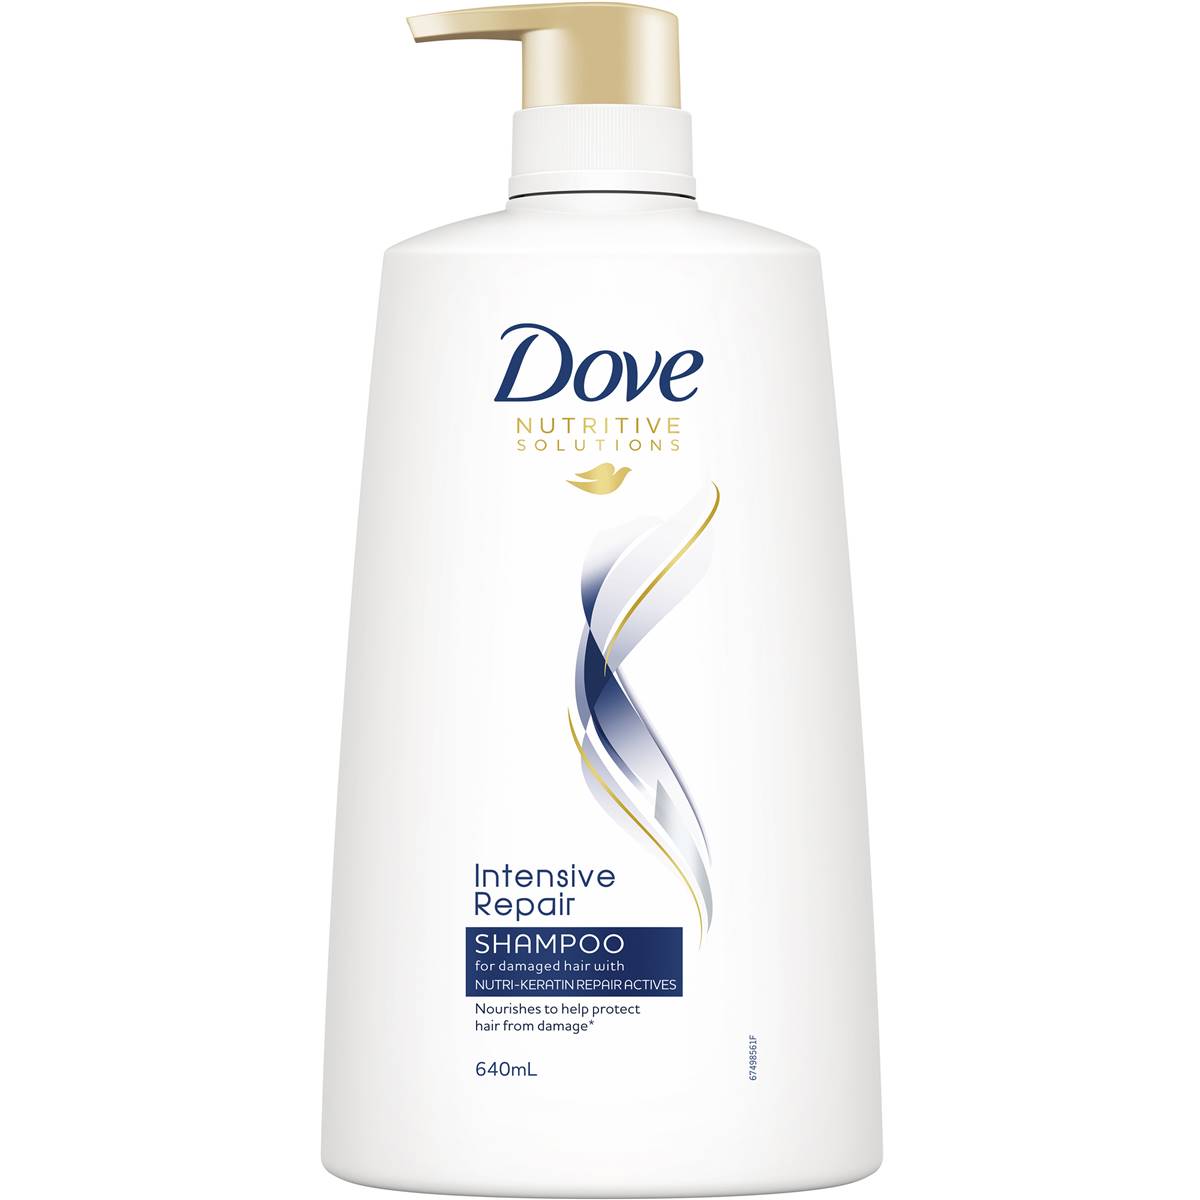 Dove Nutritive Solutions Shampoo Intensive Repair